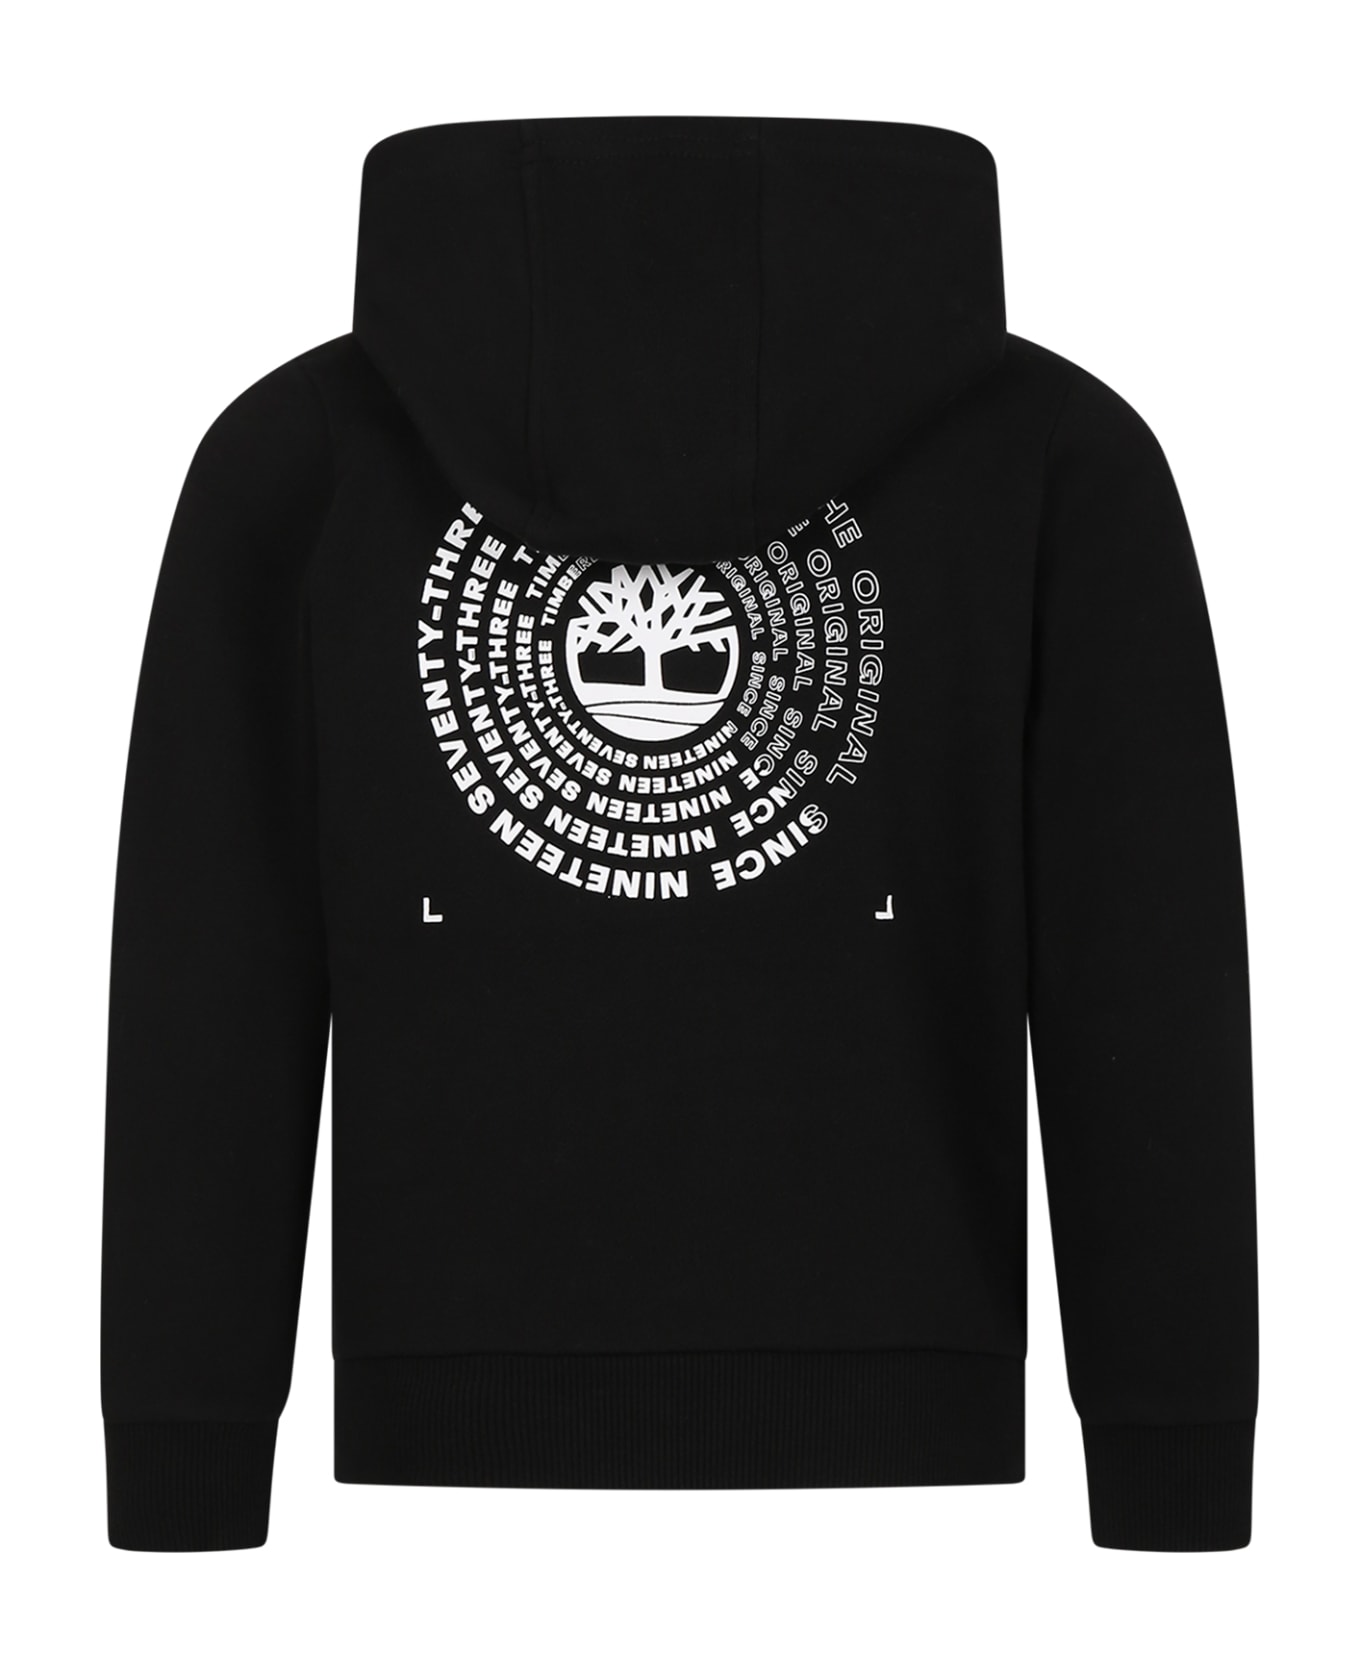 Timberland Black Sweatshirt For Boy With Logo - Black